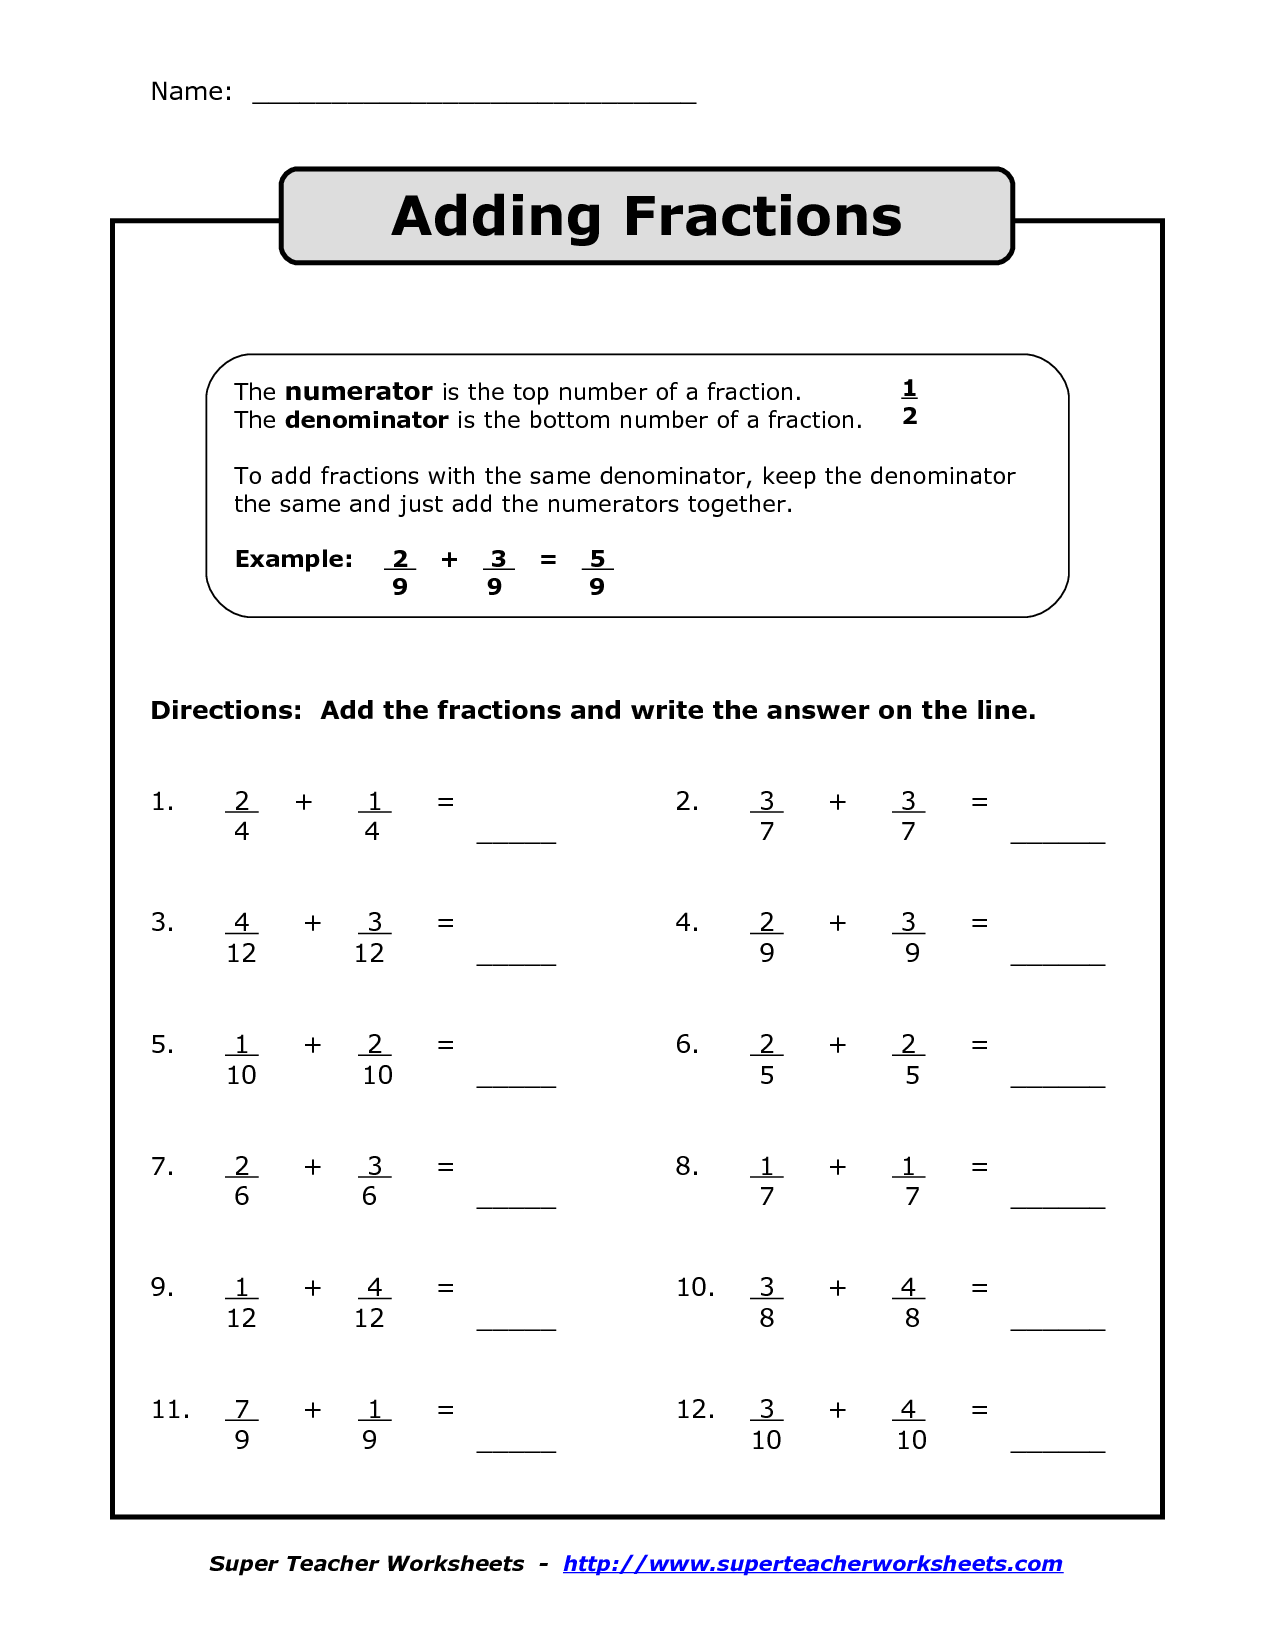 adding-fractions-worksheets-math-fractions-worksheets-fractions